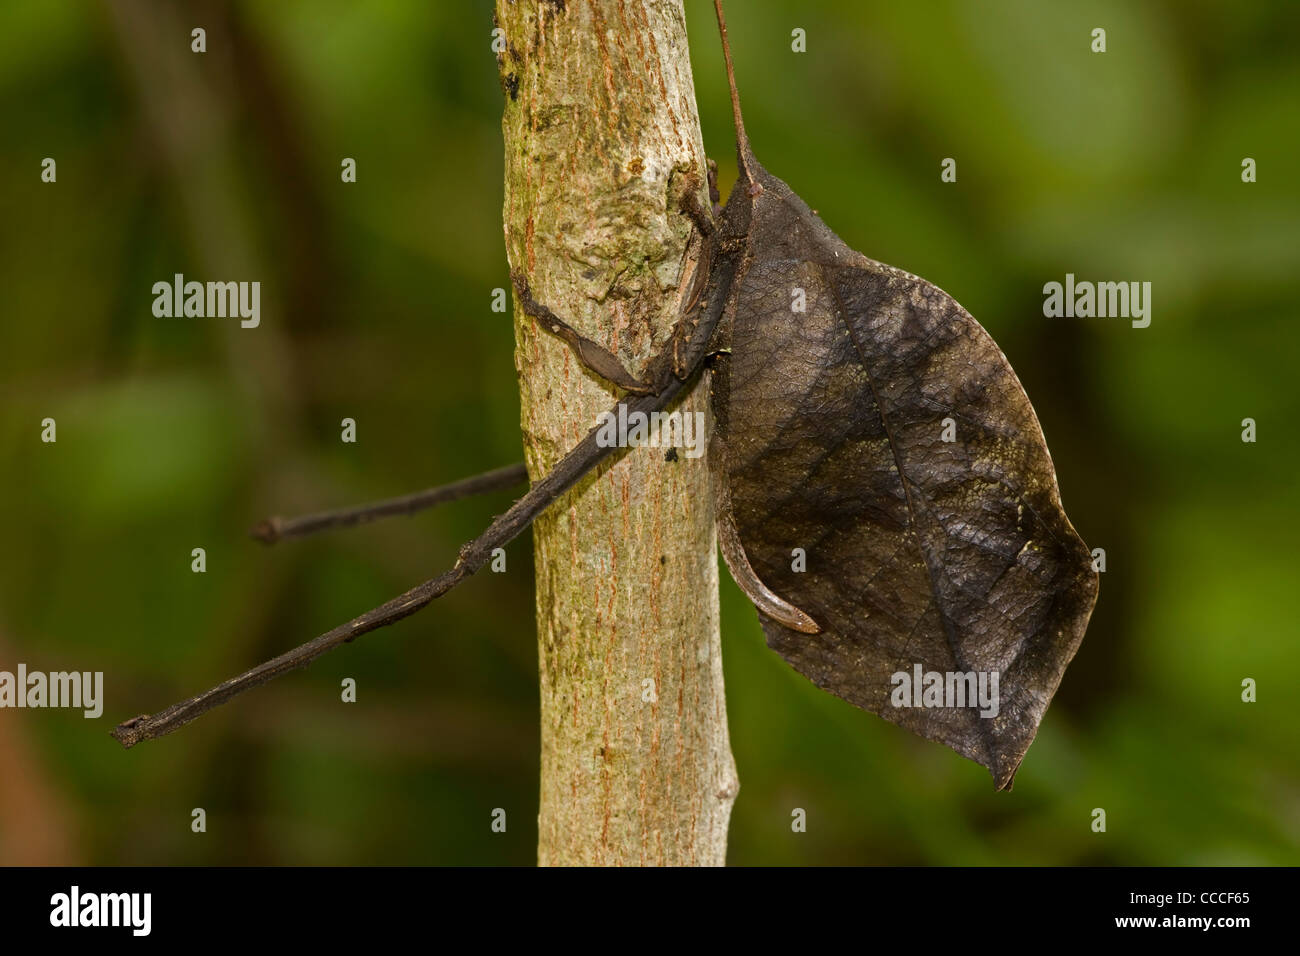 Leaf mimic katydid - Costa Rica - camoflauged to look like leaf for defense from predators Stock Photo